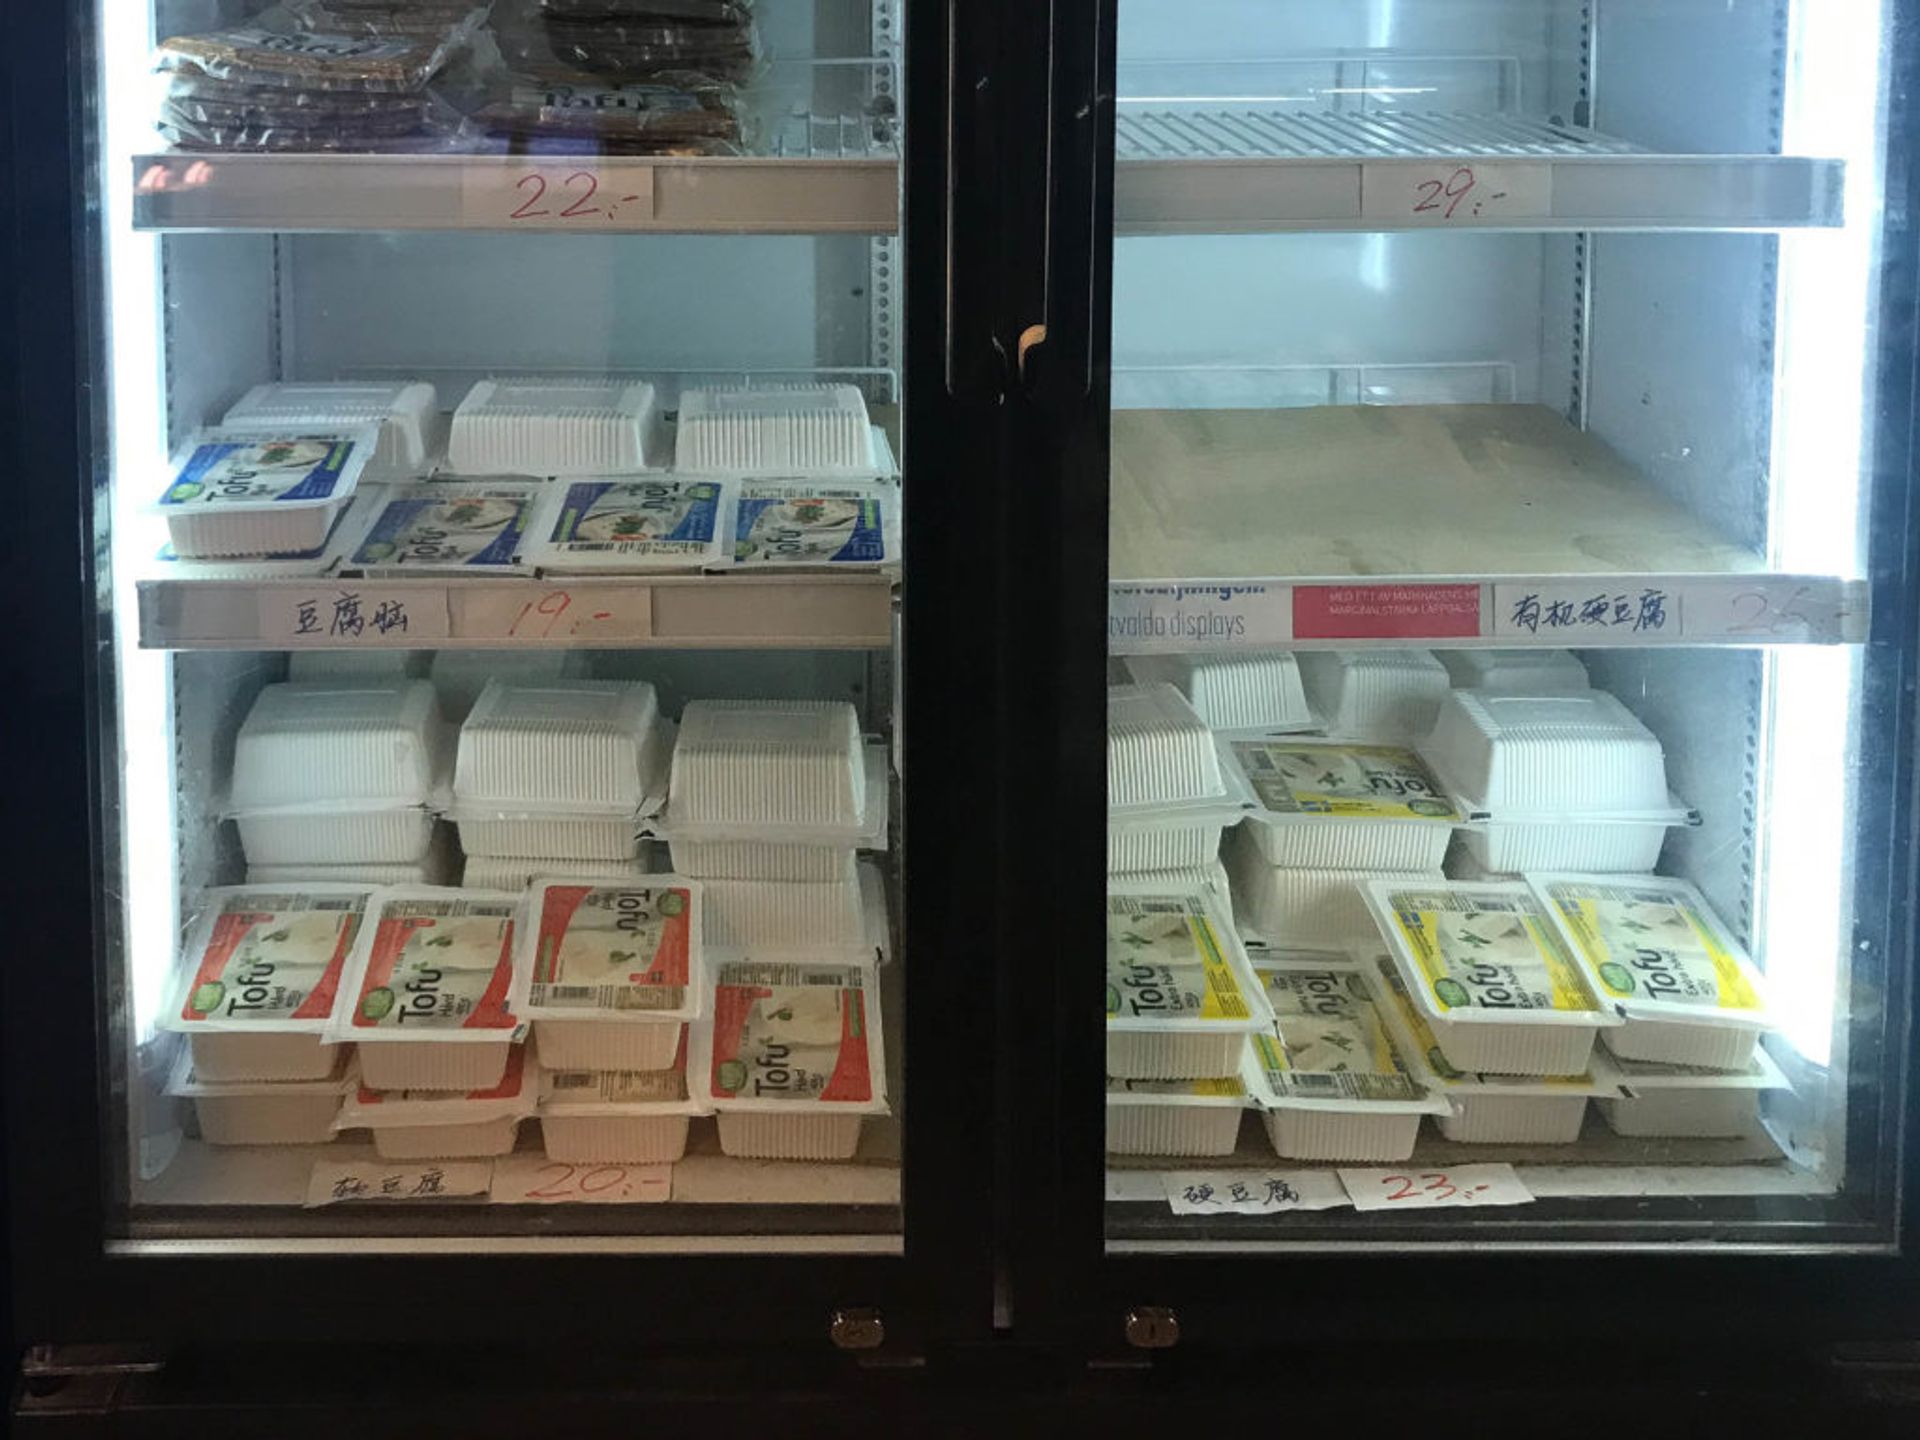 Shelves of tofu in a fridge.